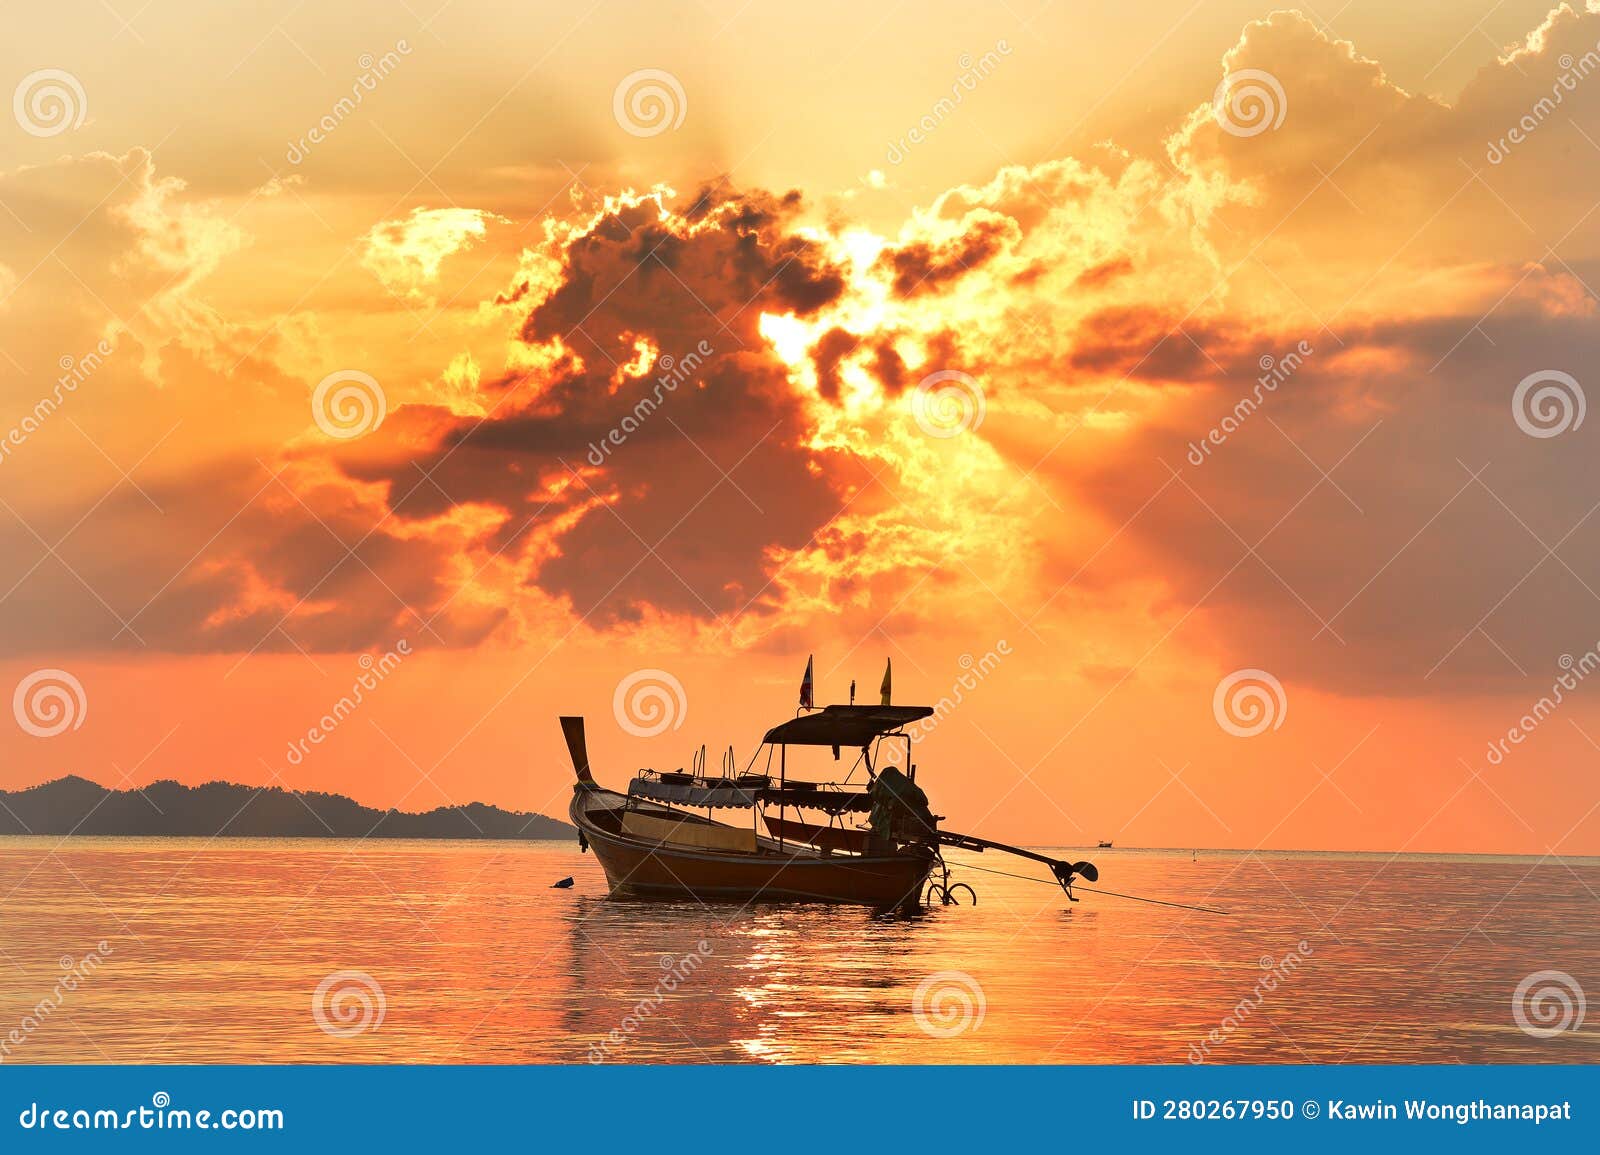 traveling empty thai longtail boat under golden sun rays